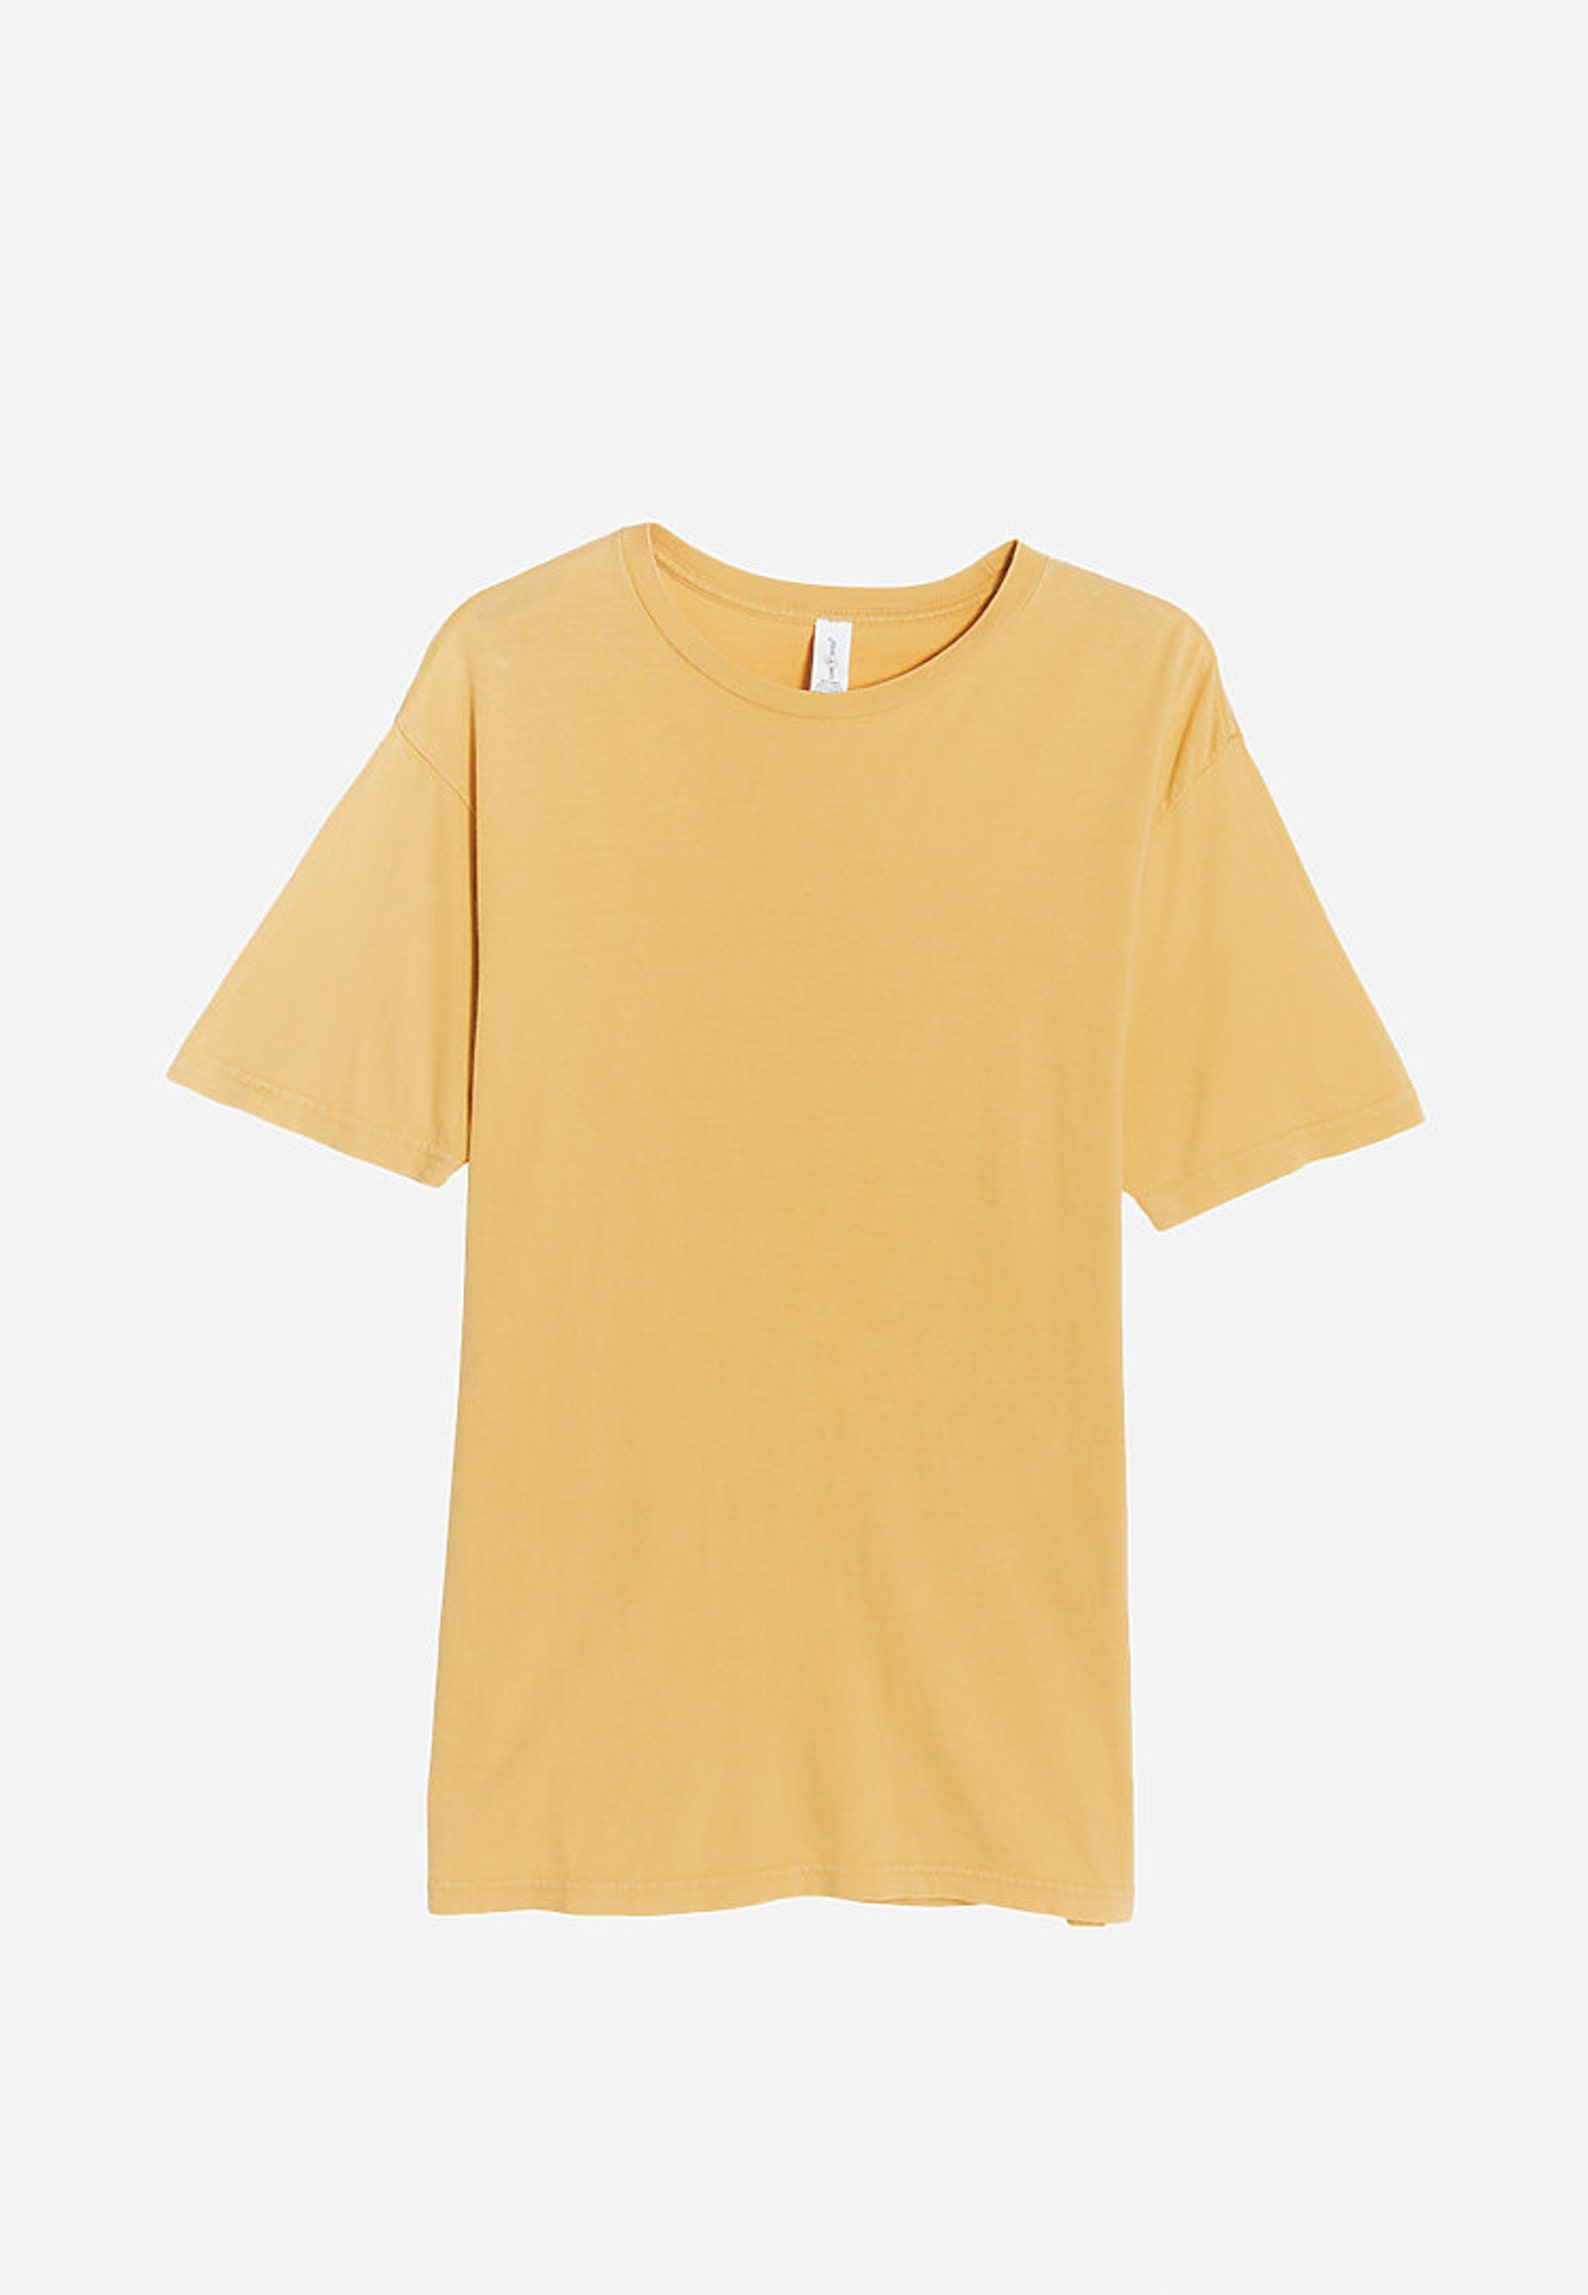 Vintage Wash Mustard Yellow T-shirts Lightweight Tee Summer - Etsy